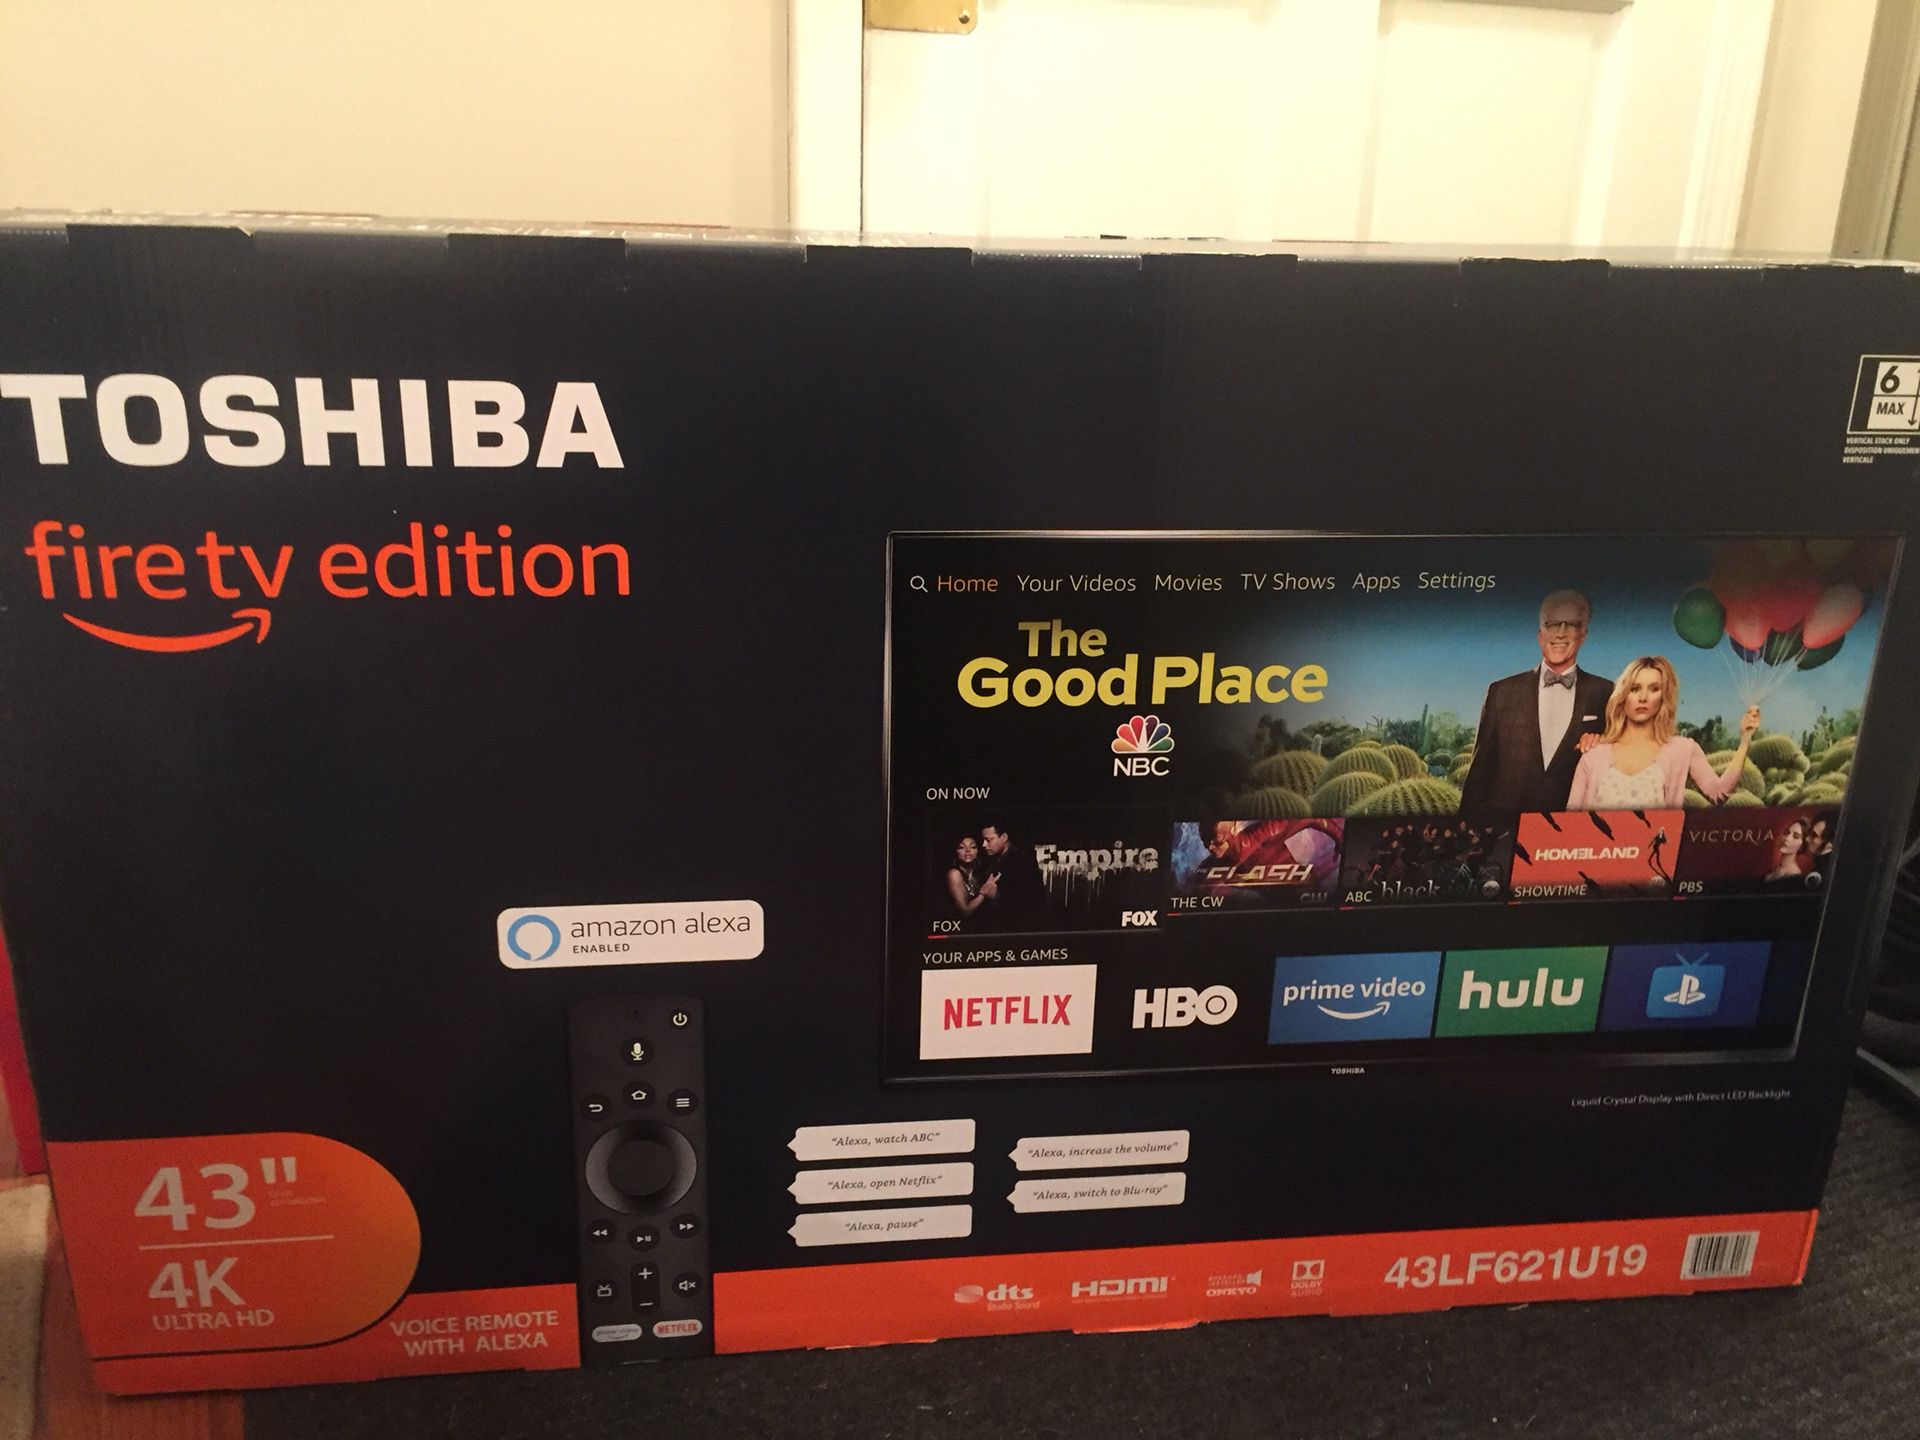 Toshiba fire Tv w/ Alexa installed